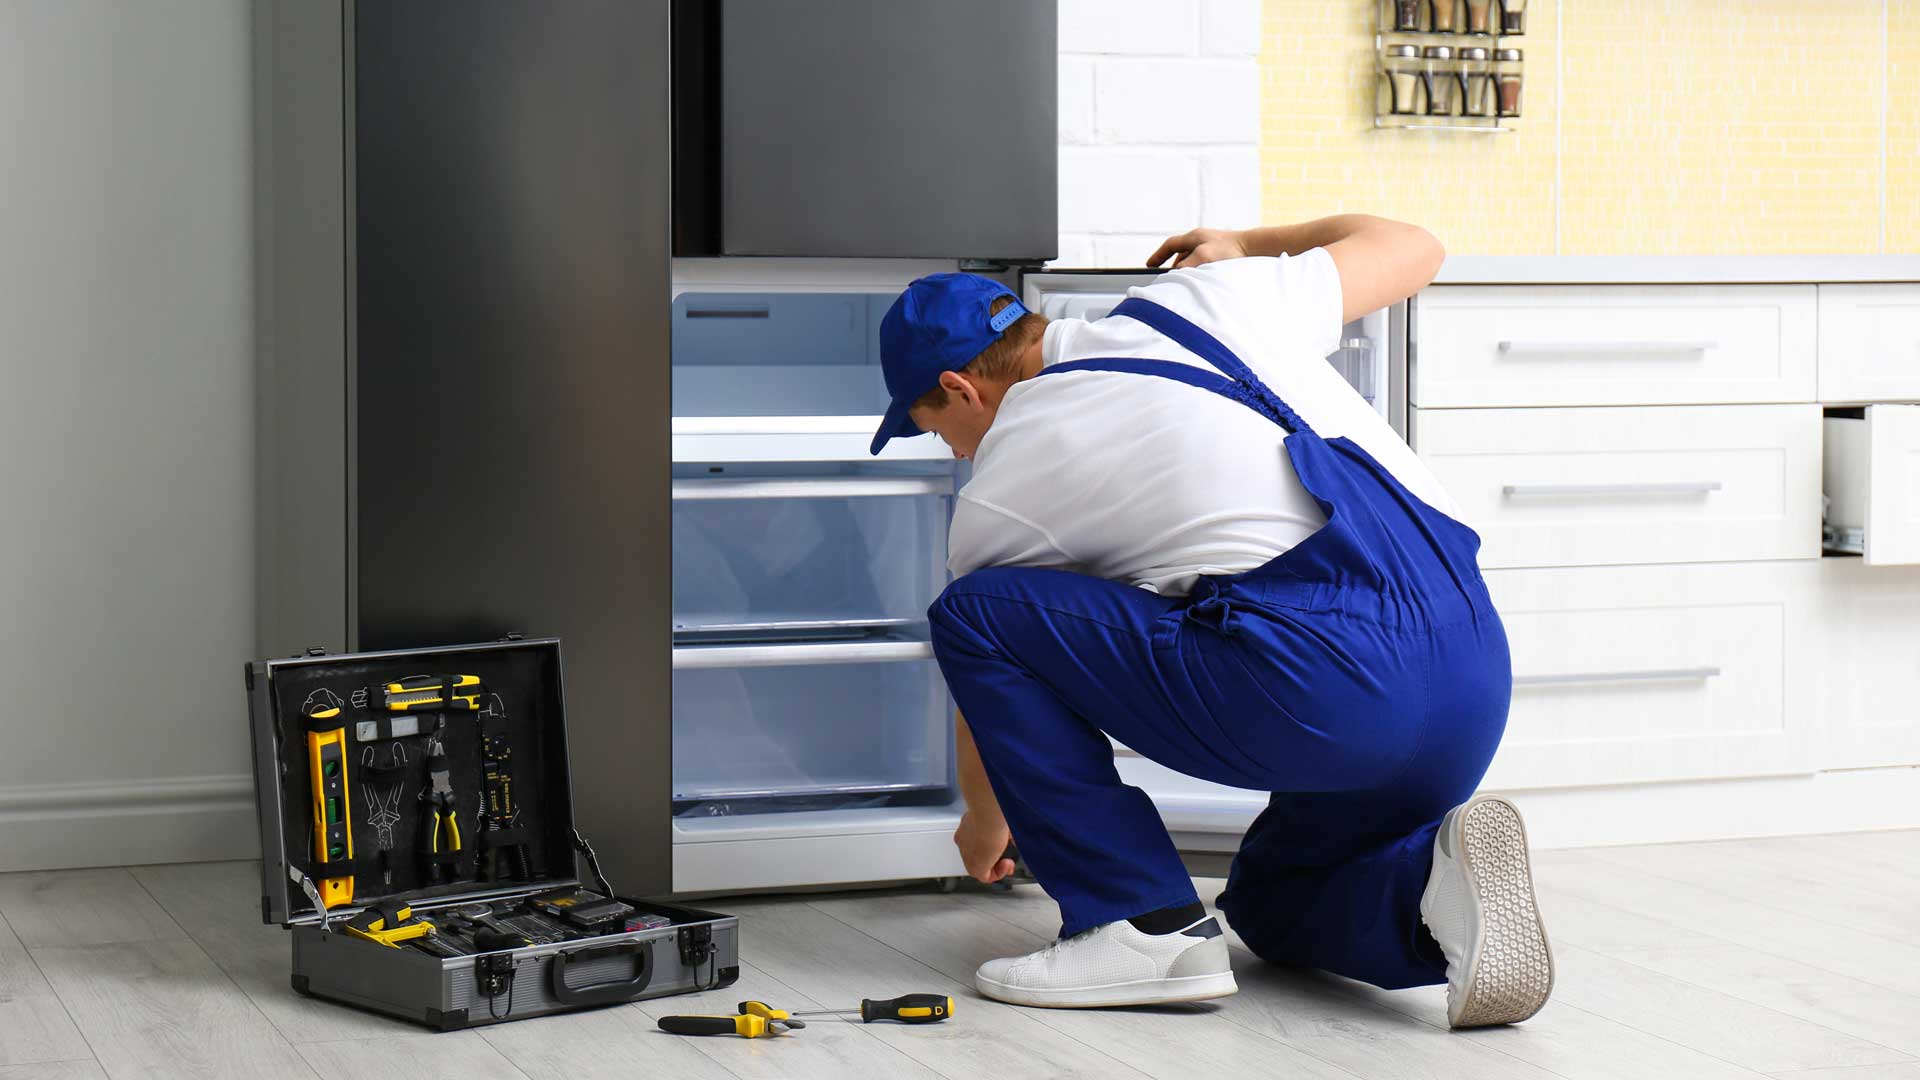 Appliance repair technician working on a refrigerator